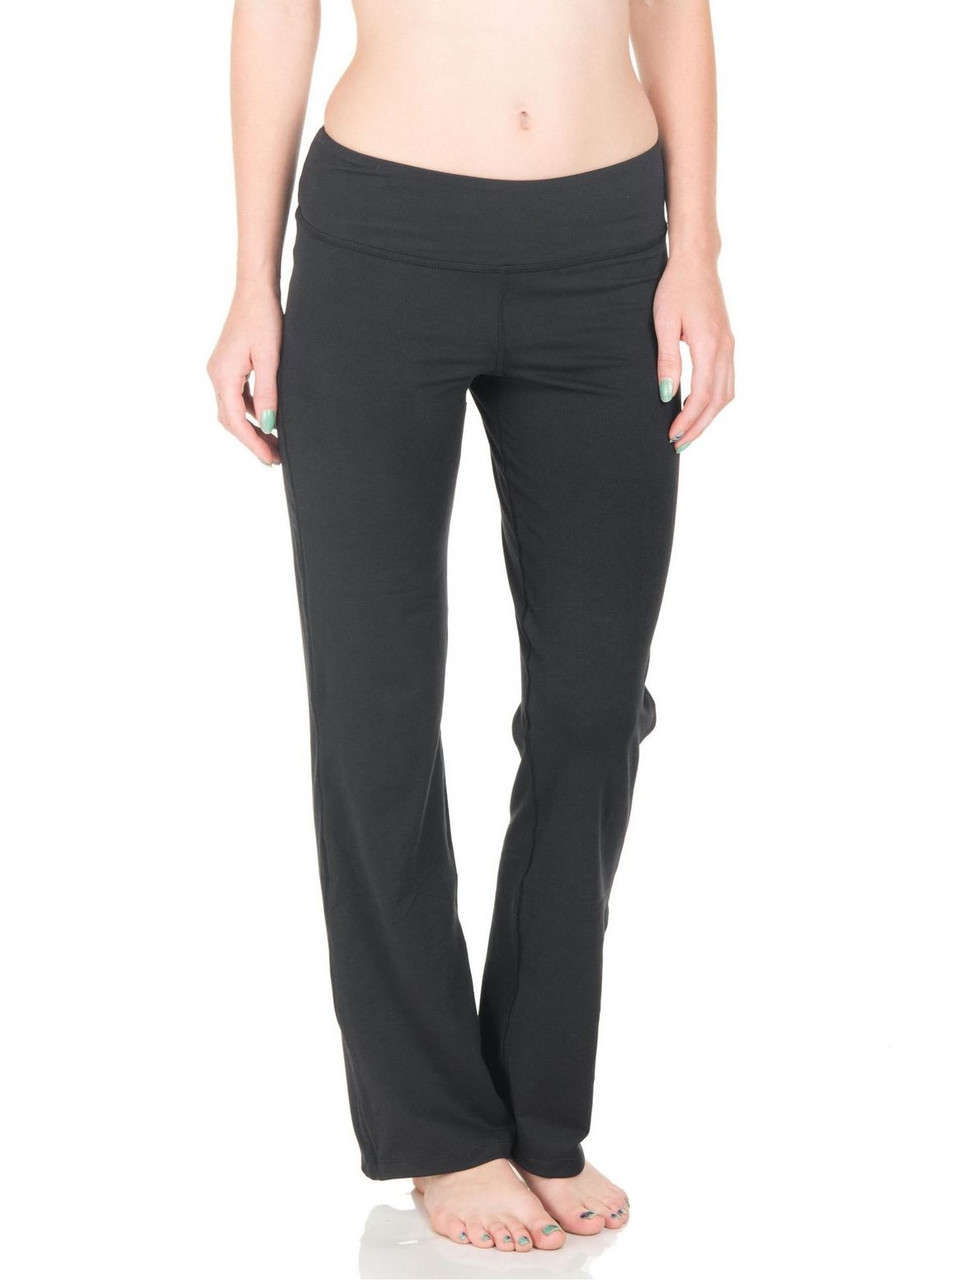 Medium Weight Yoga Pants - Kalon Clothing